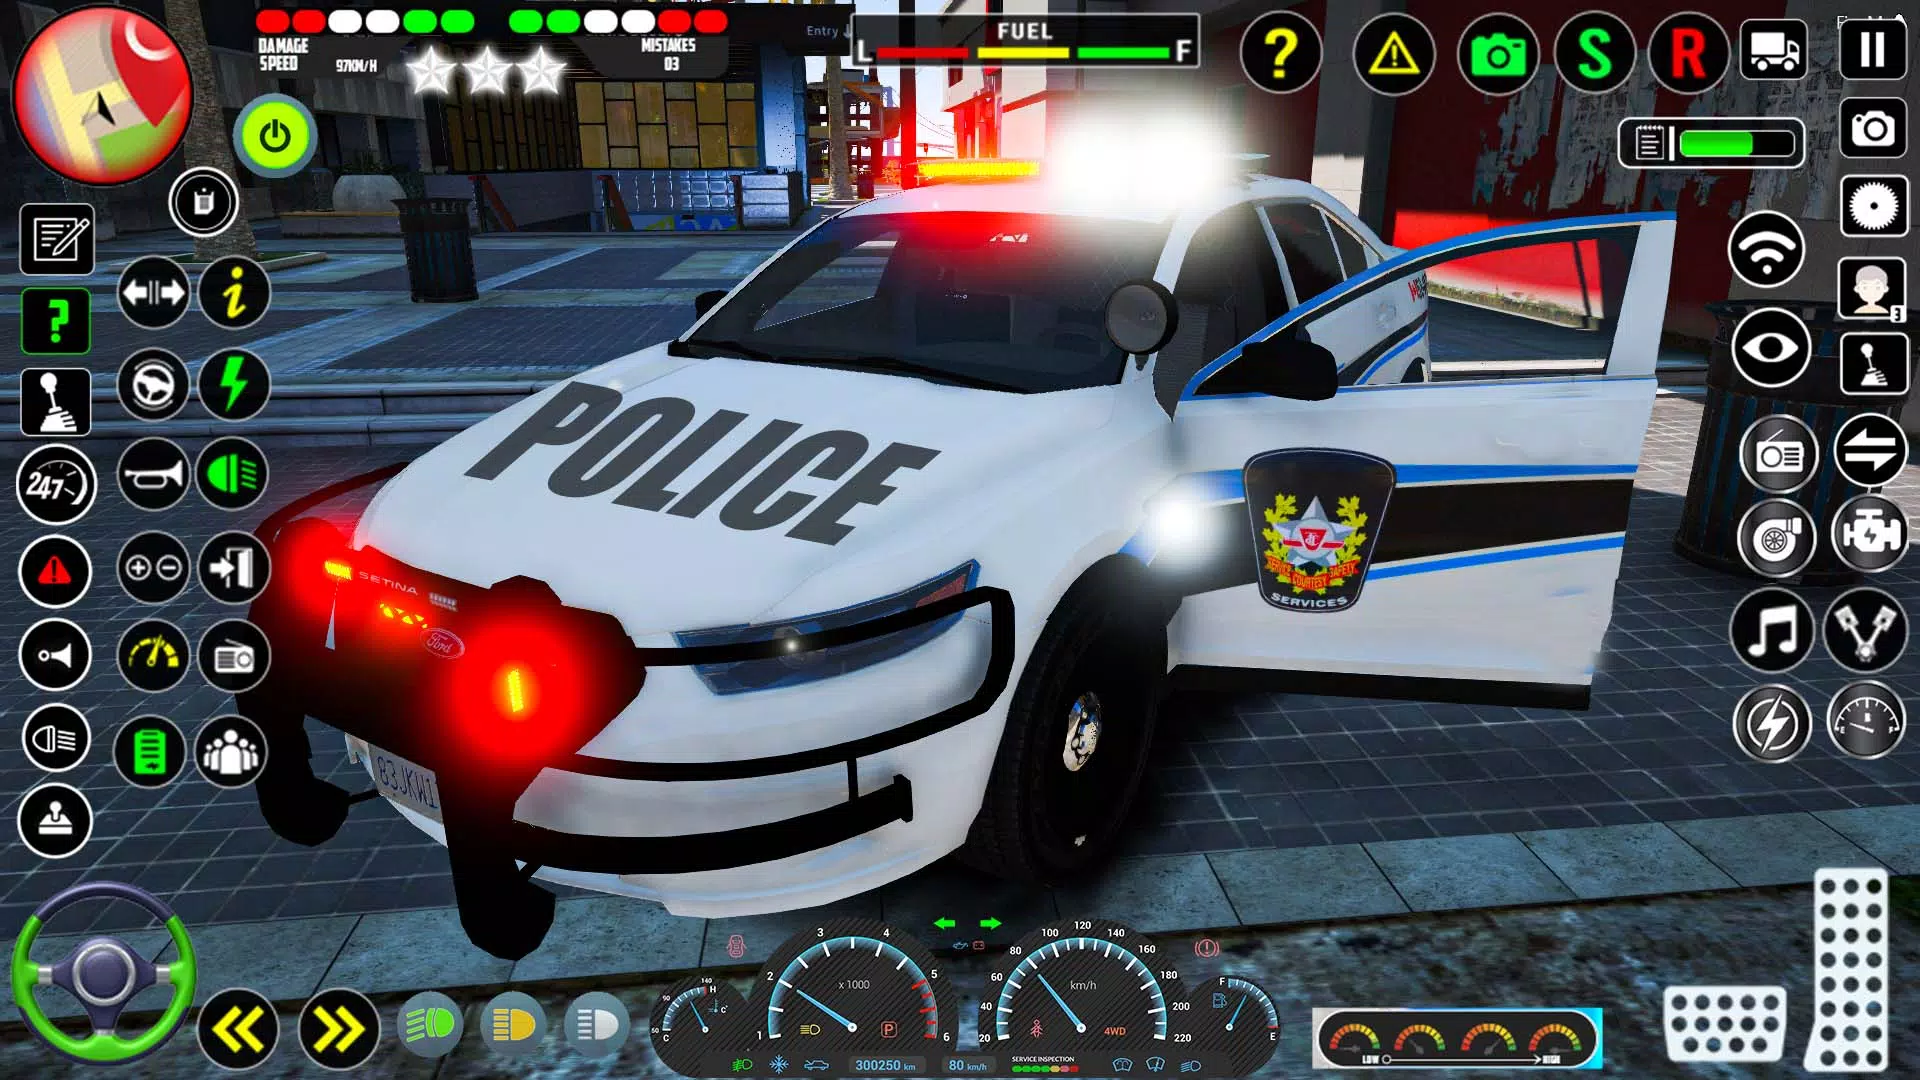 US Police Car Parking Simulation Game : 64BIT APK – Sell My App